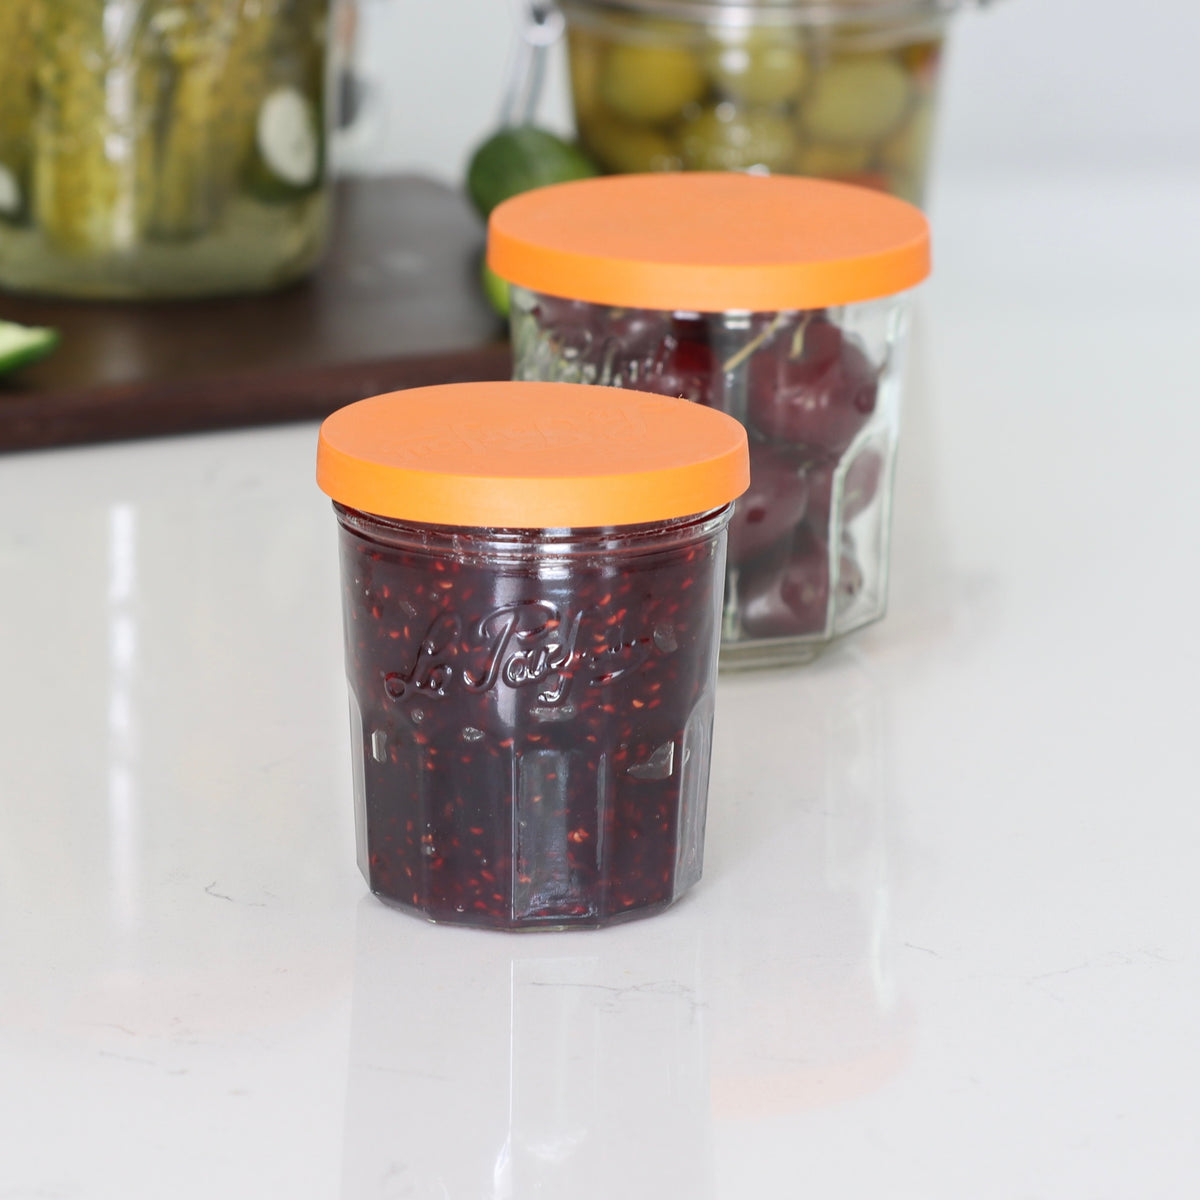 French Jam Pot With Orange Cover - Small - Holistic Habitat 